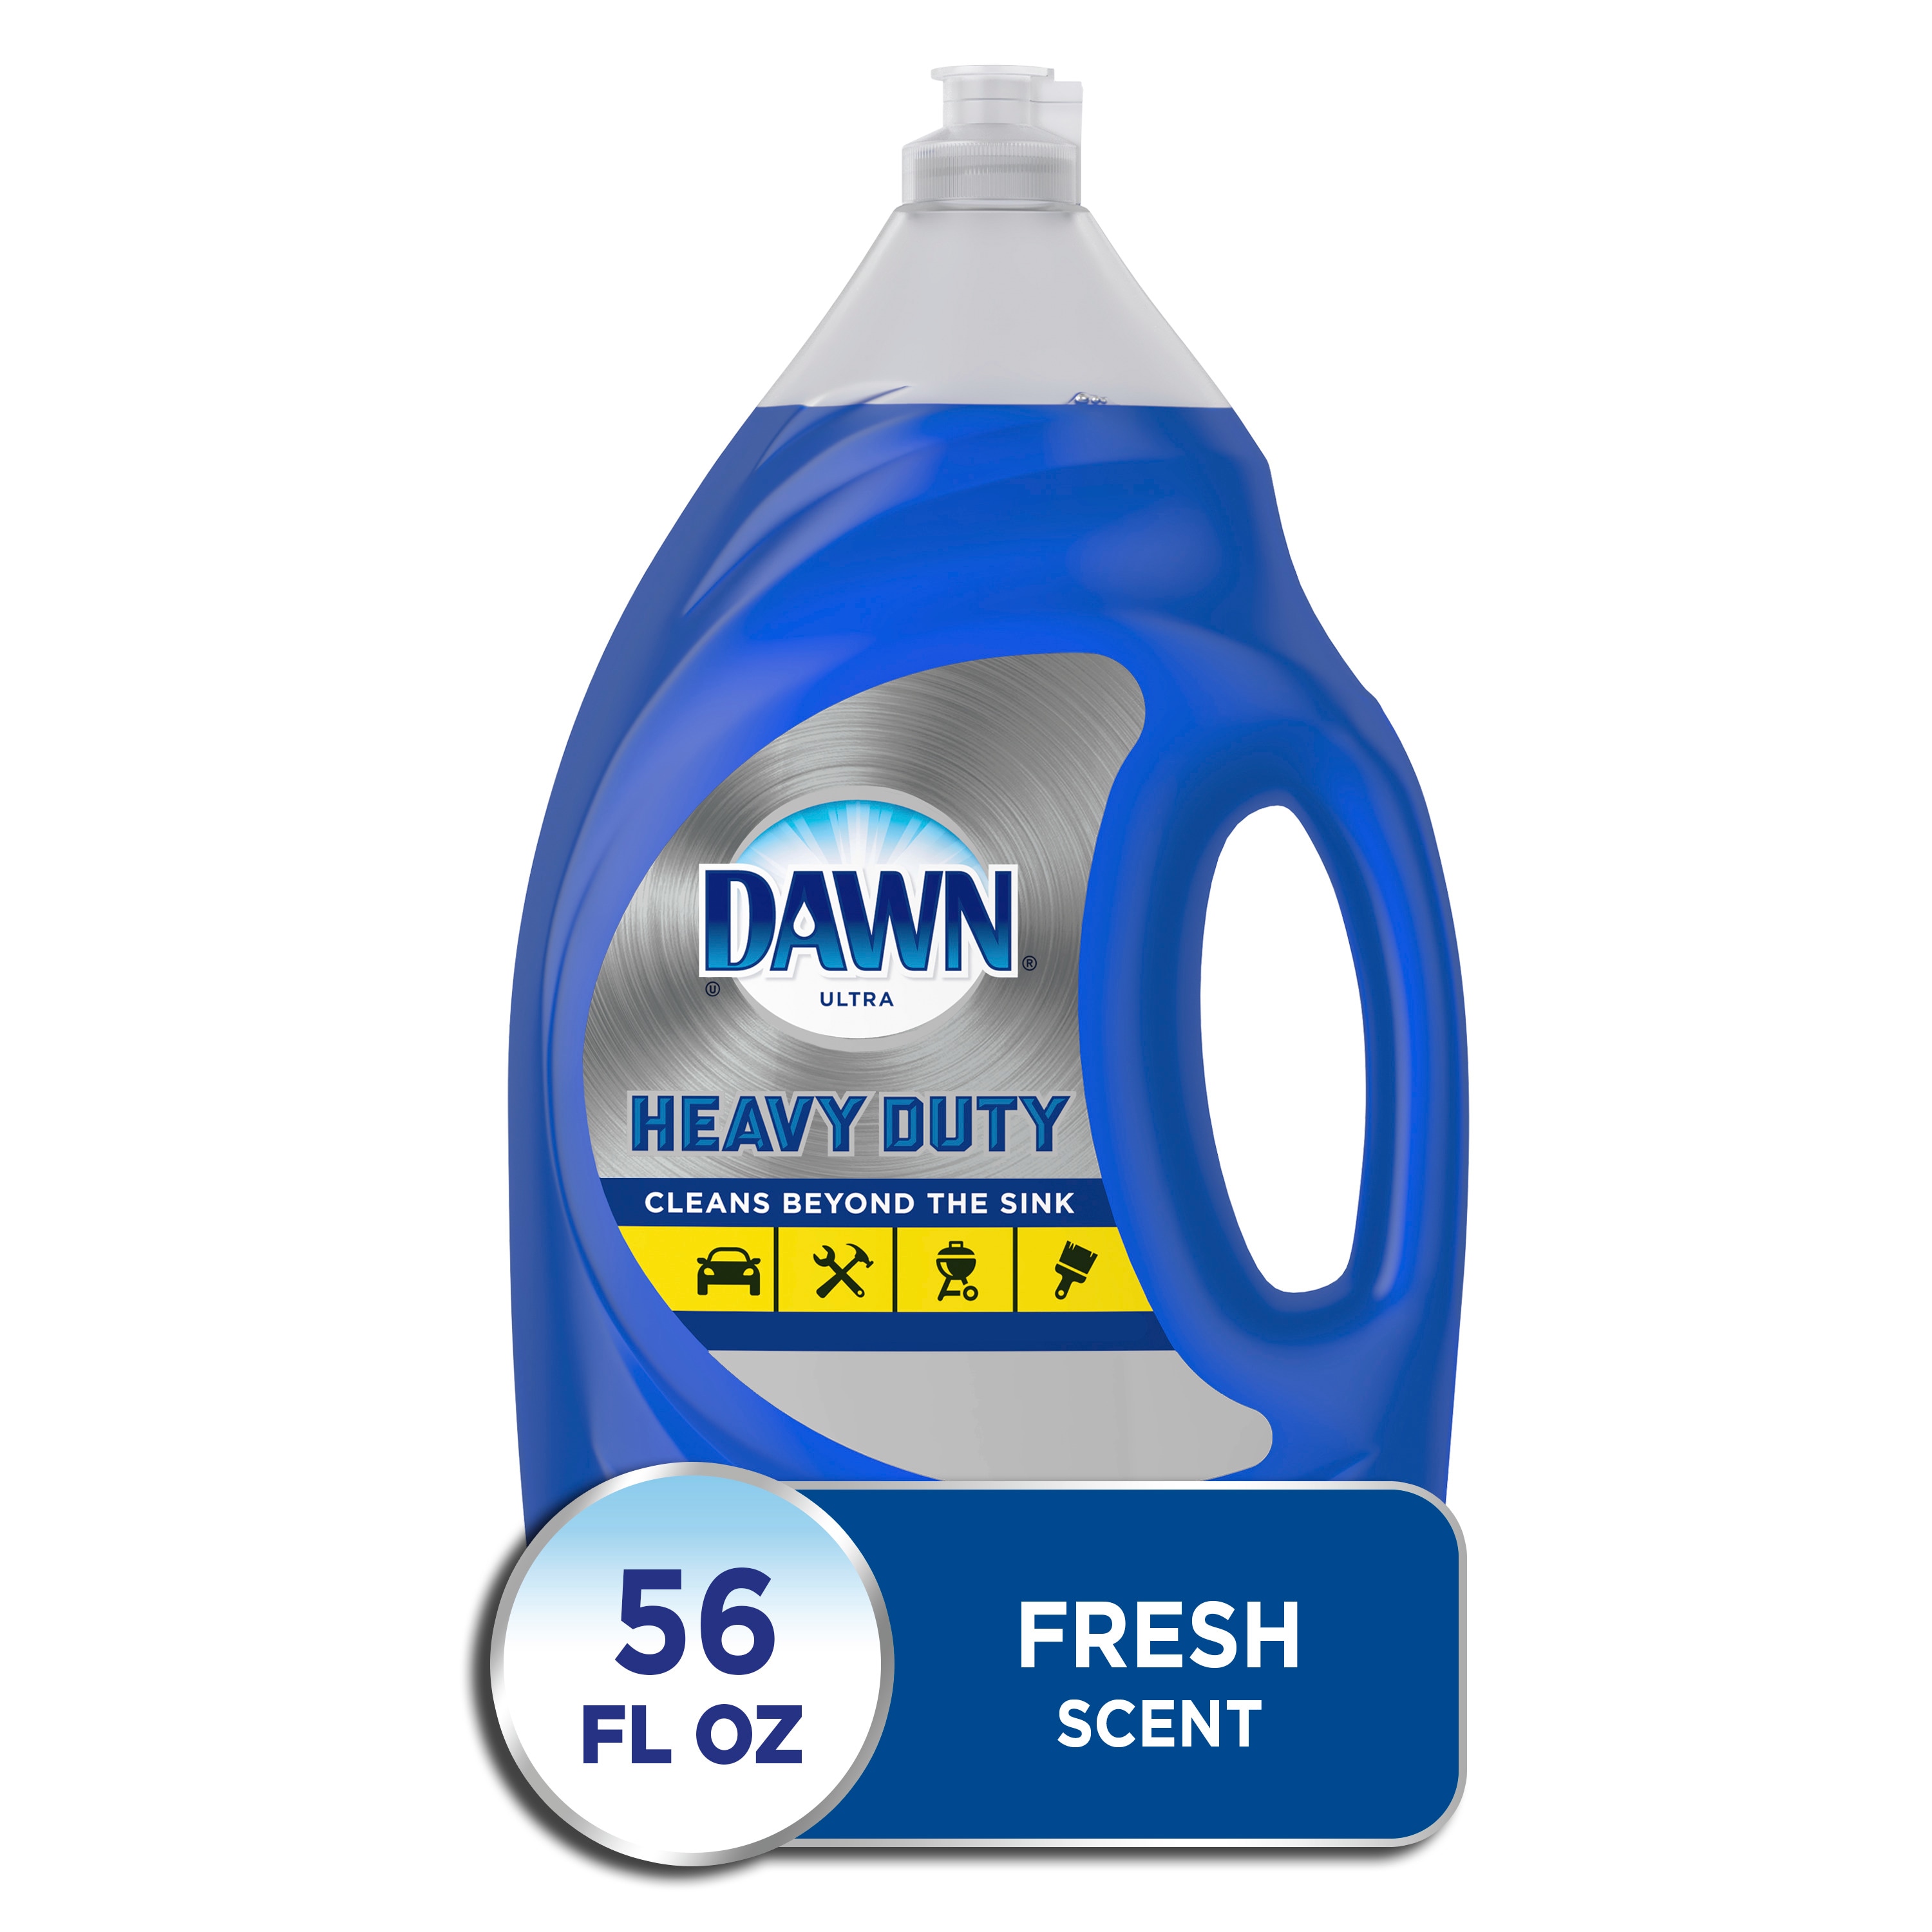 Dawn 01301 38 oz. Ultra Original Dish Soap